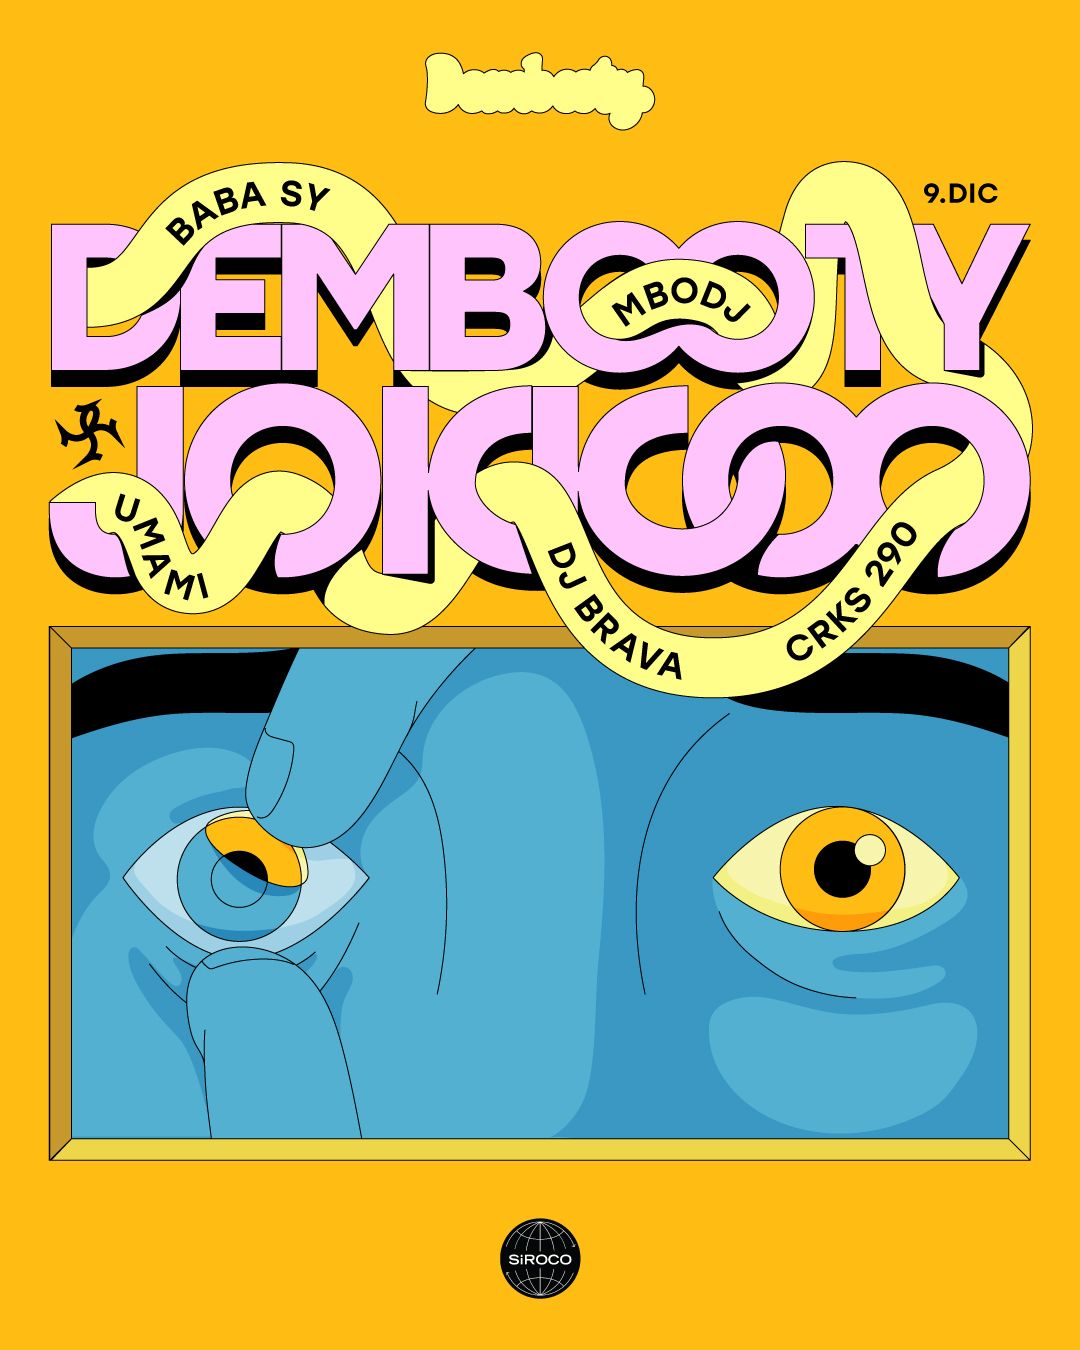 Dembooty x Jokkoo: Baba Sy + Brava + Crks290 + Mbodj + Umami